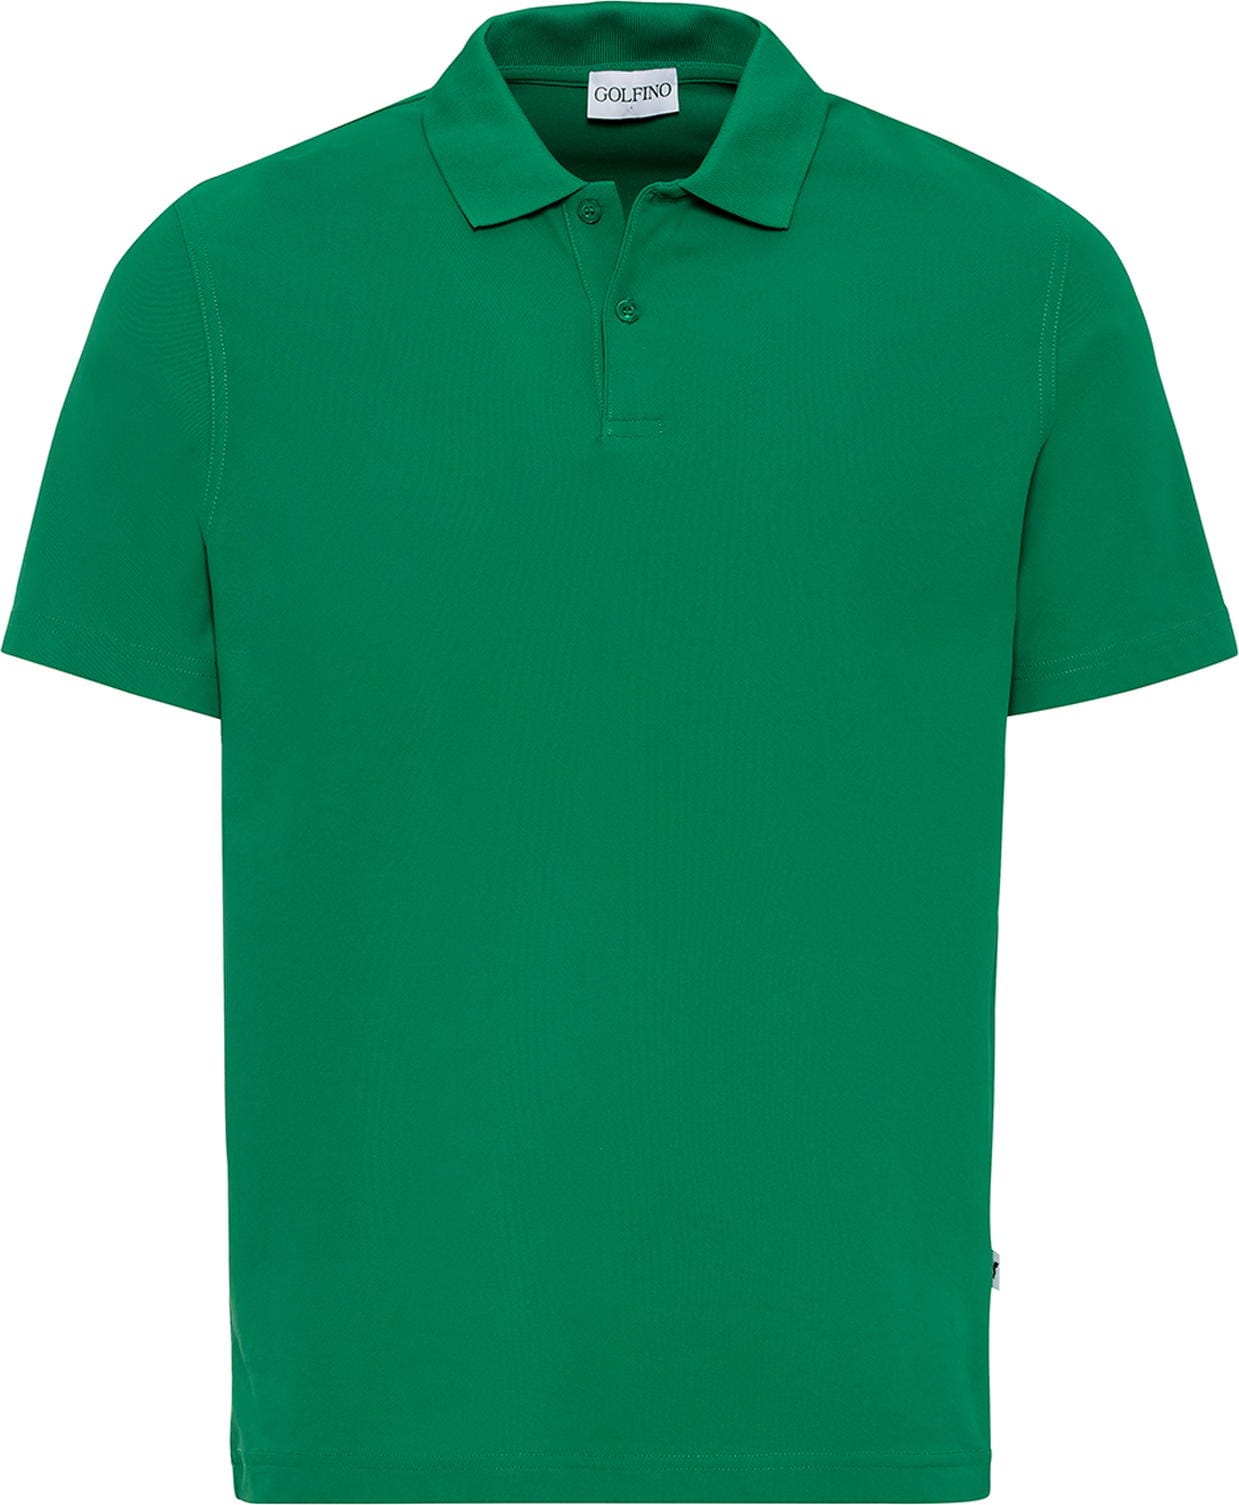 Golfino Marbella Polo, green